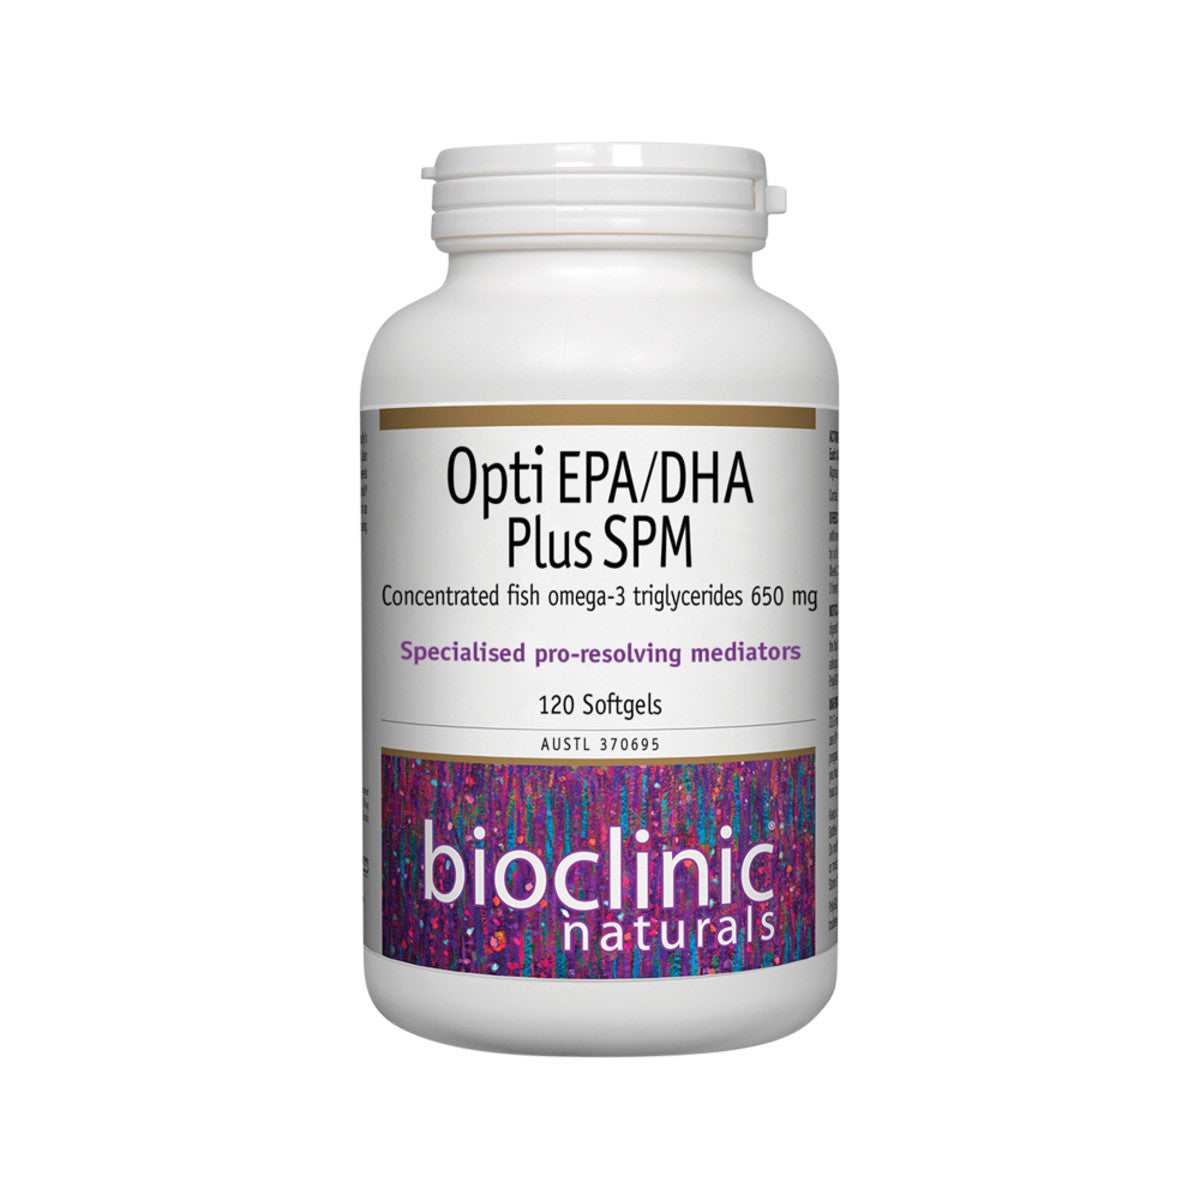 Bioclinic Naturals - Opti EPA DHA Plus SPM